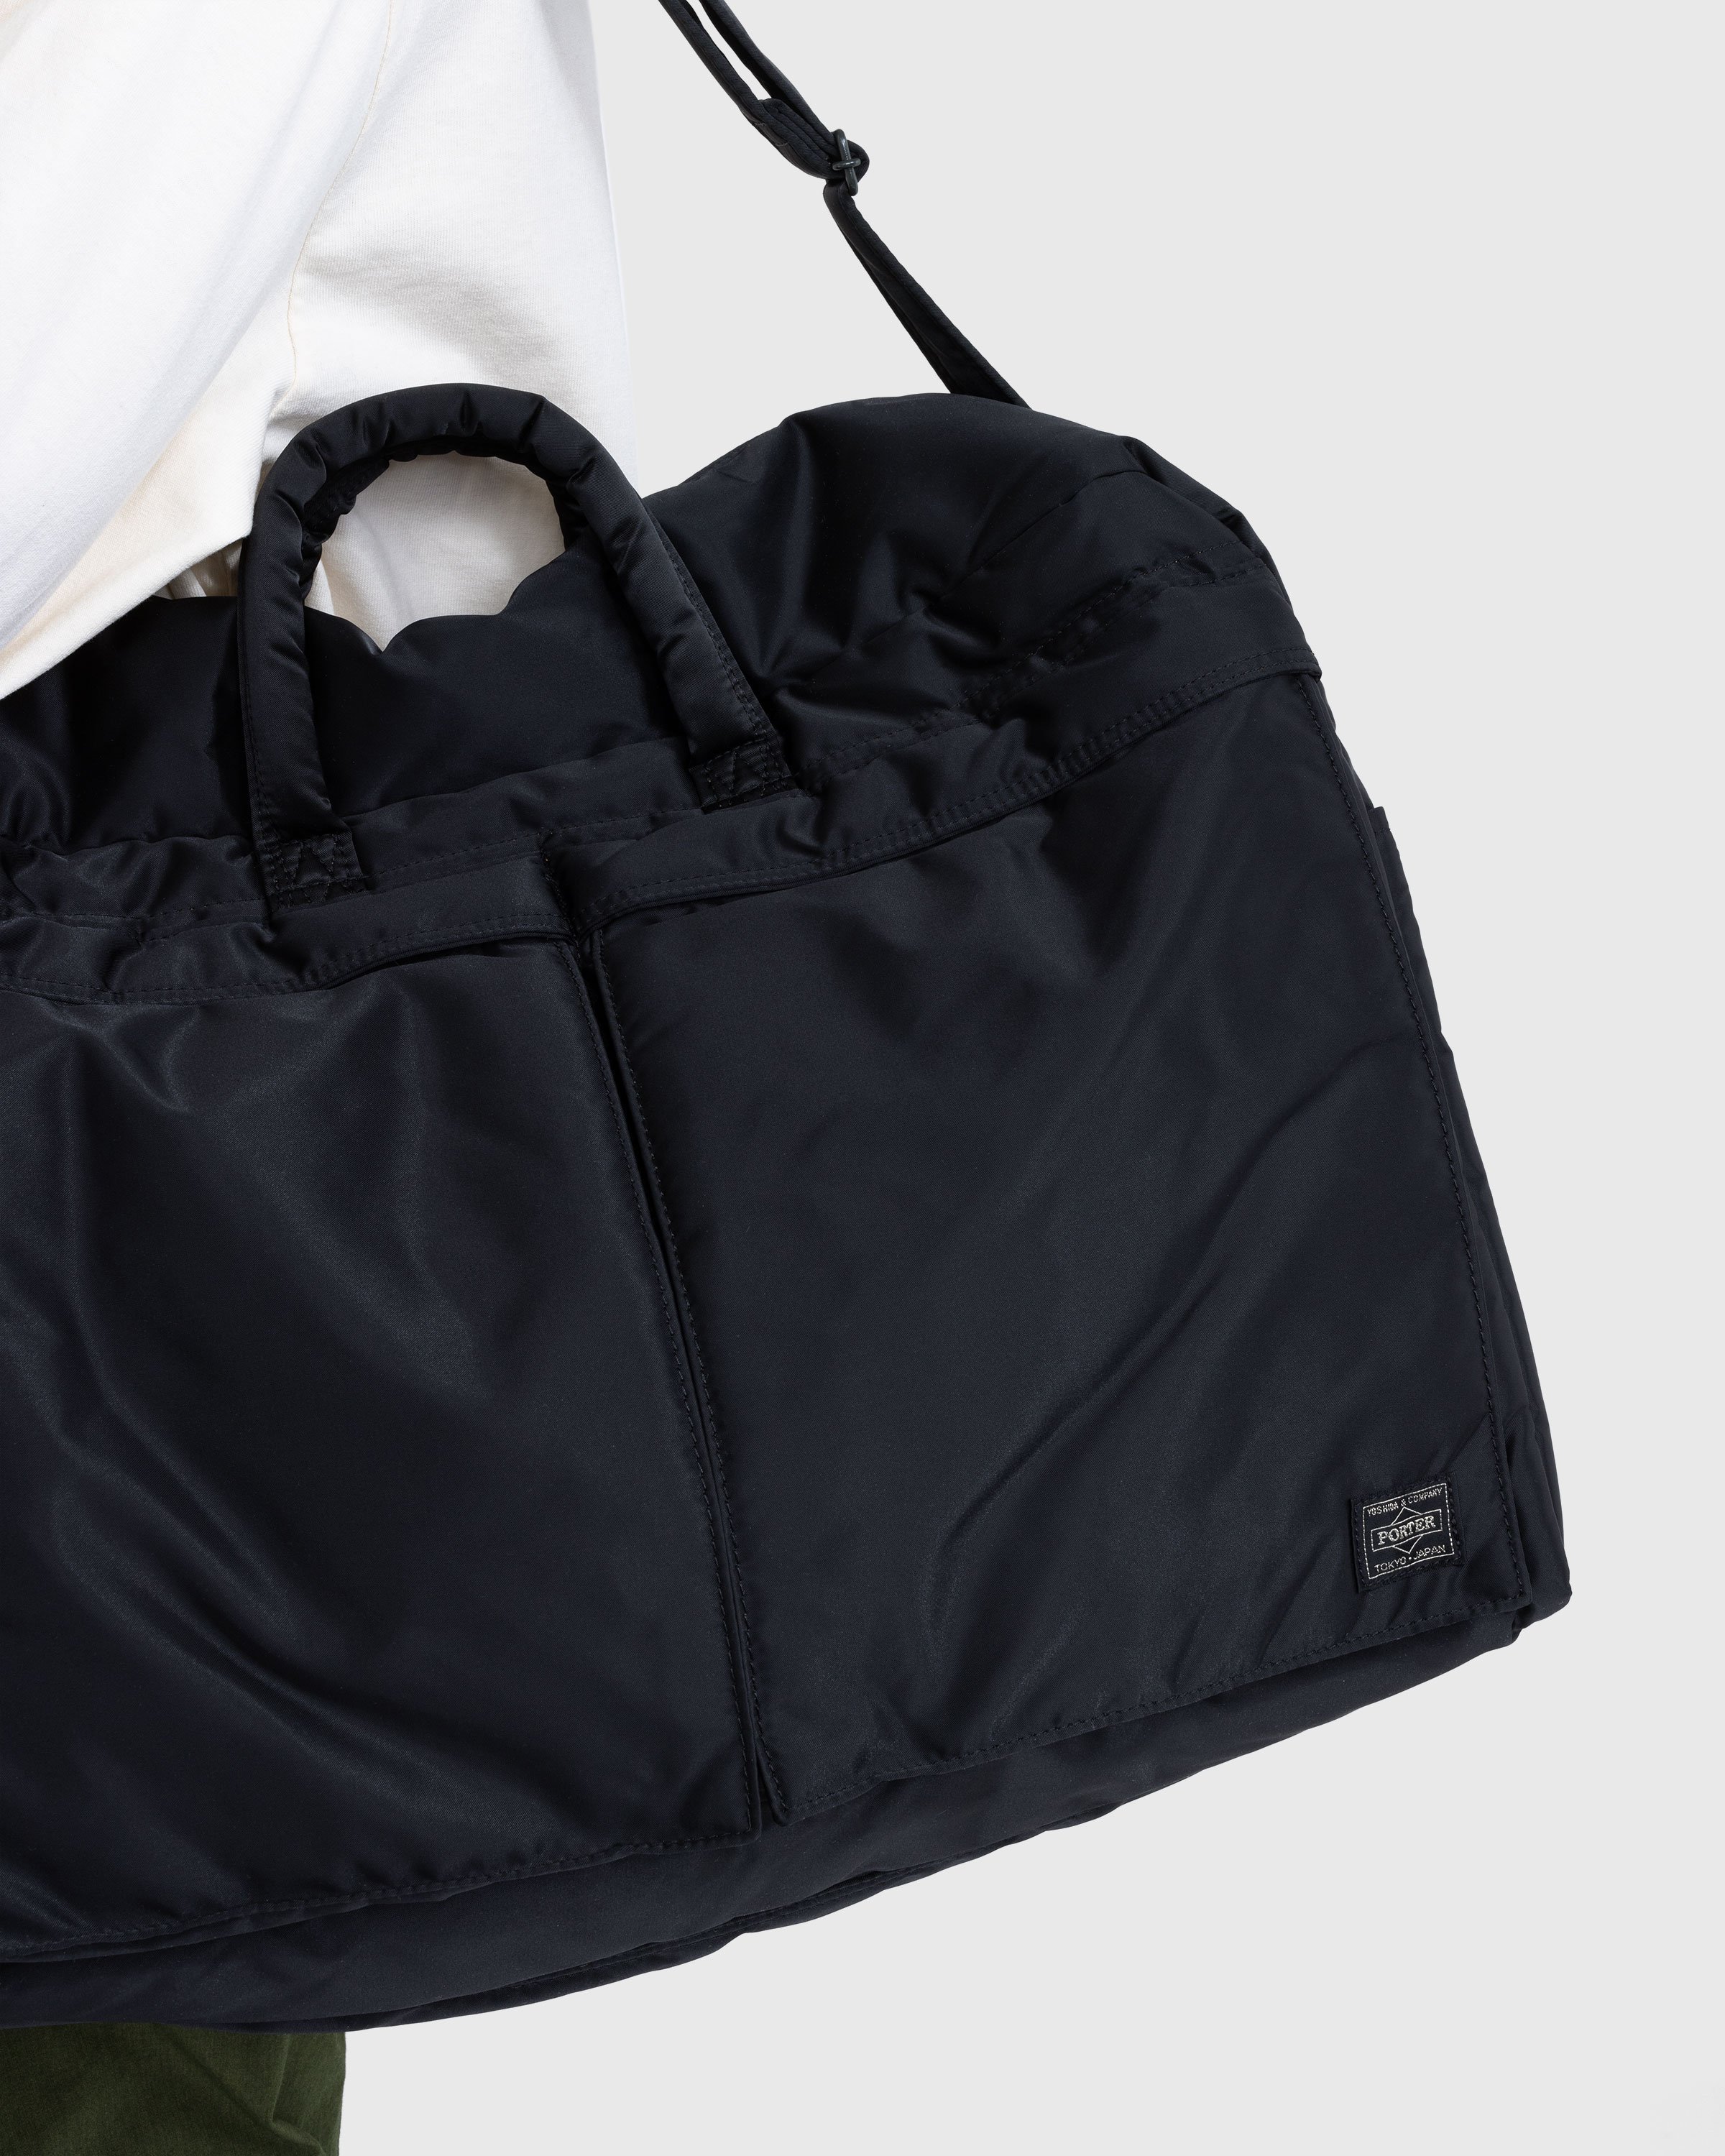 Porter-Yoshida & Co. - TANKER 2WAY DUFFLE BAG (S) - Accessories - Black - Image 5